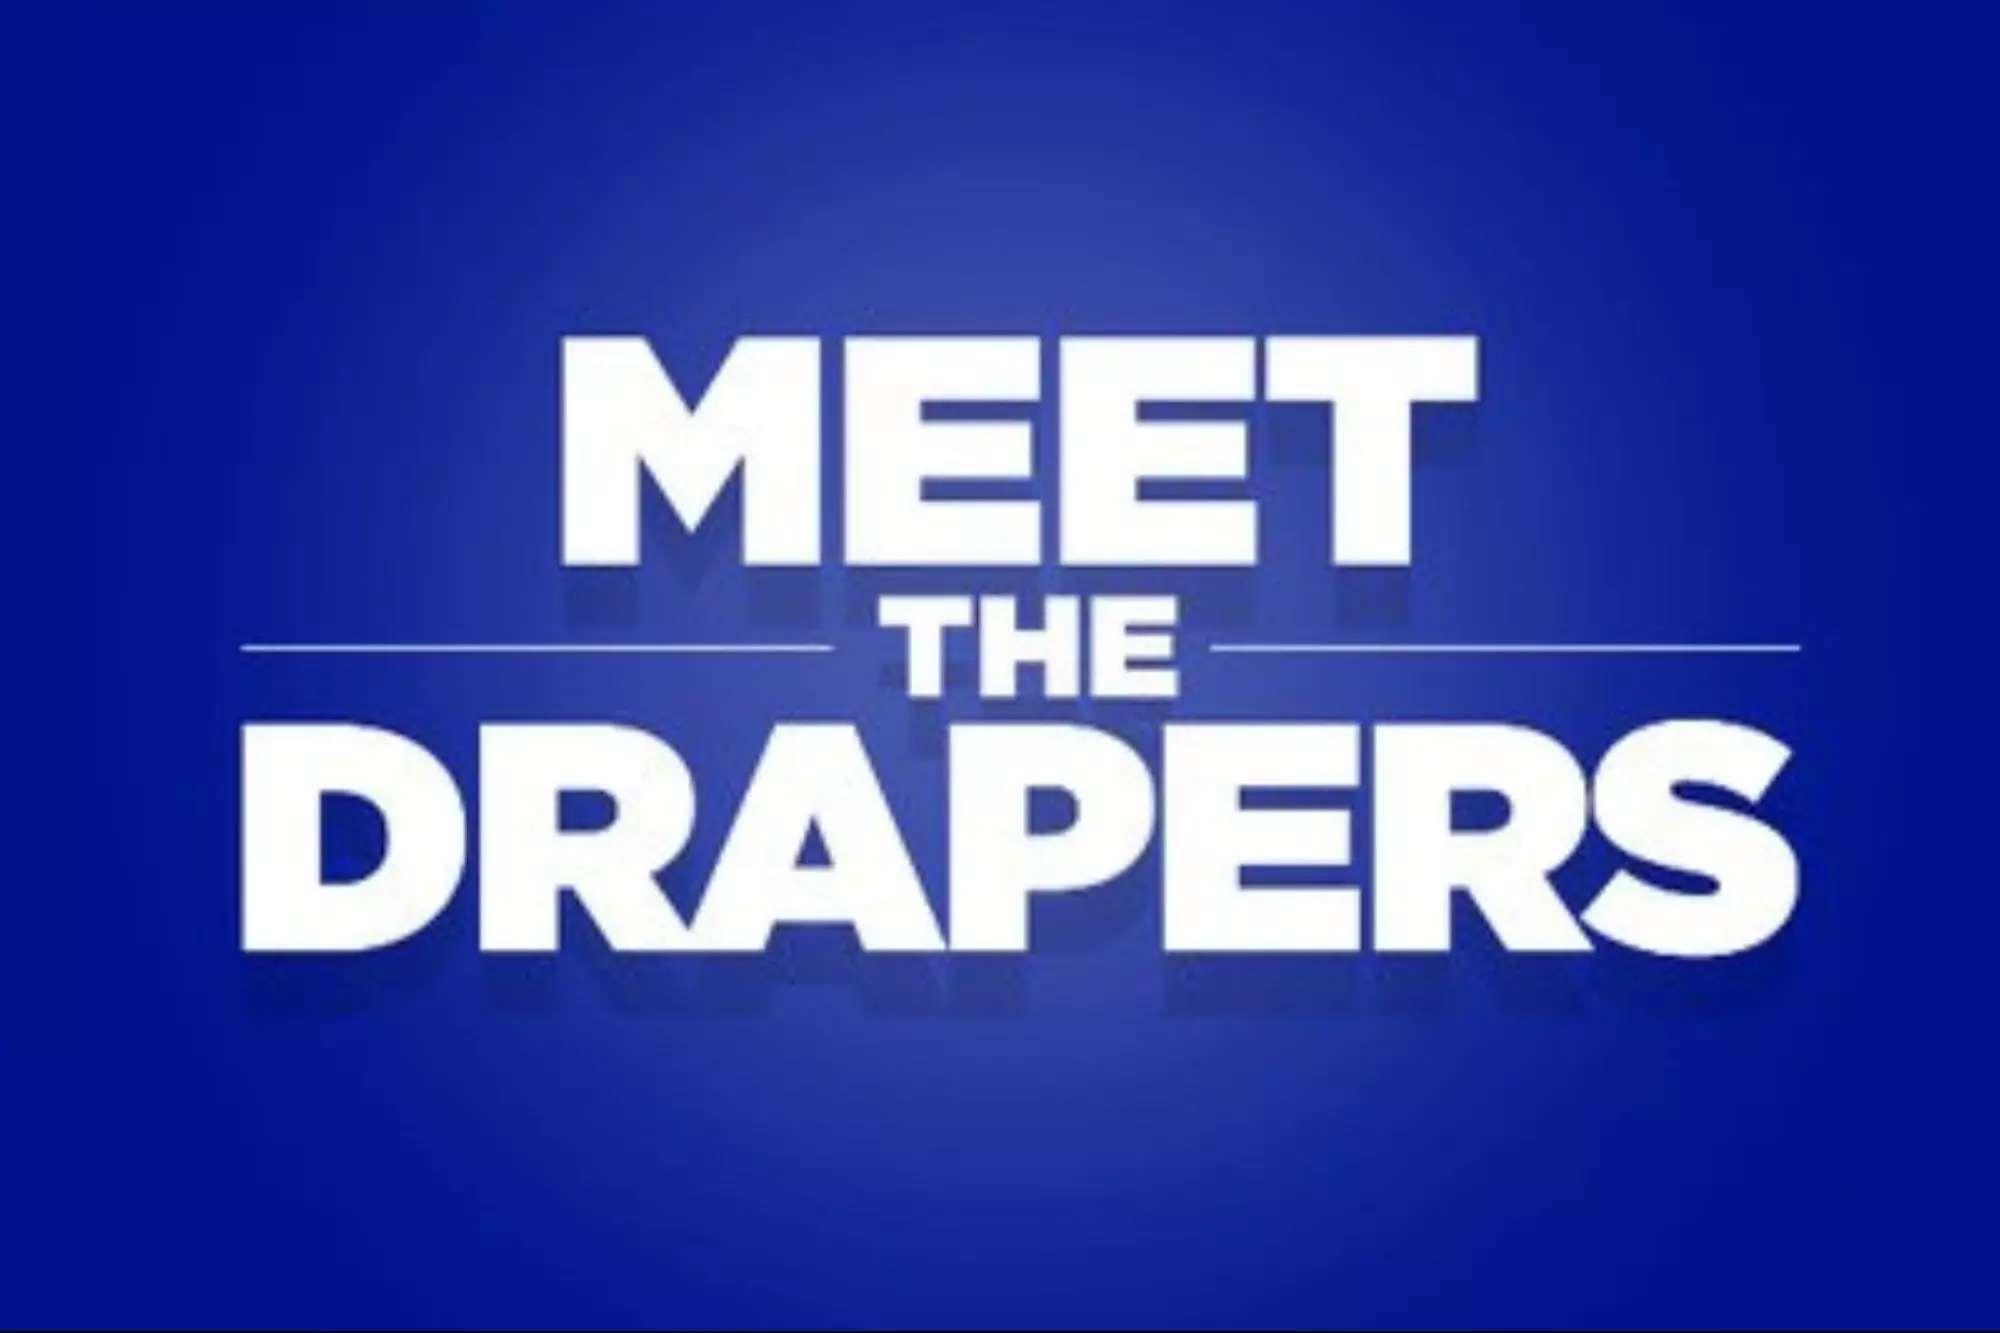 Meet the drapers